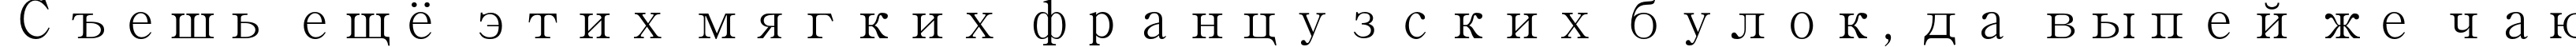 Пример написания шрифтом Adobe Myungjo Std M текста на русском